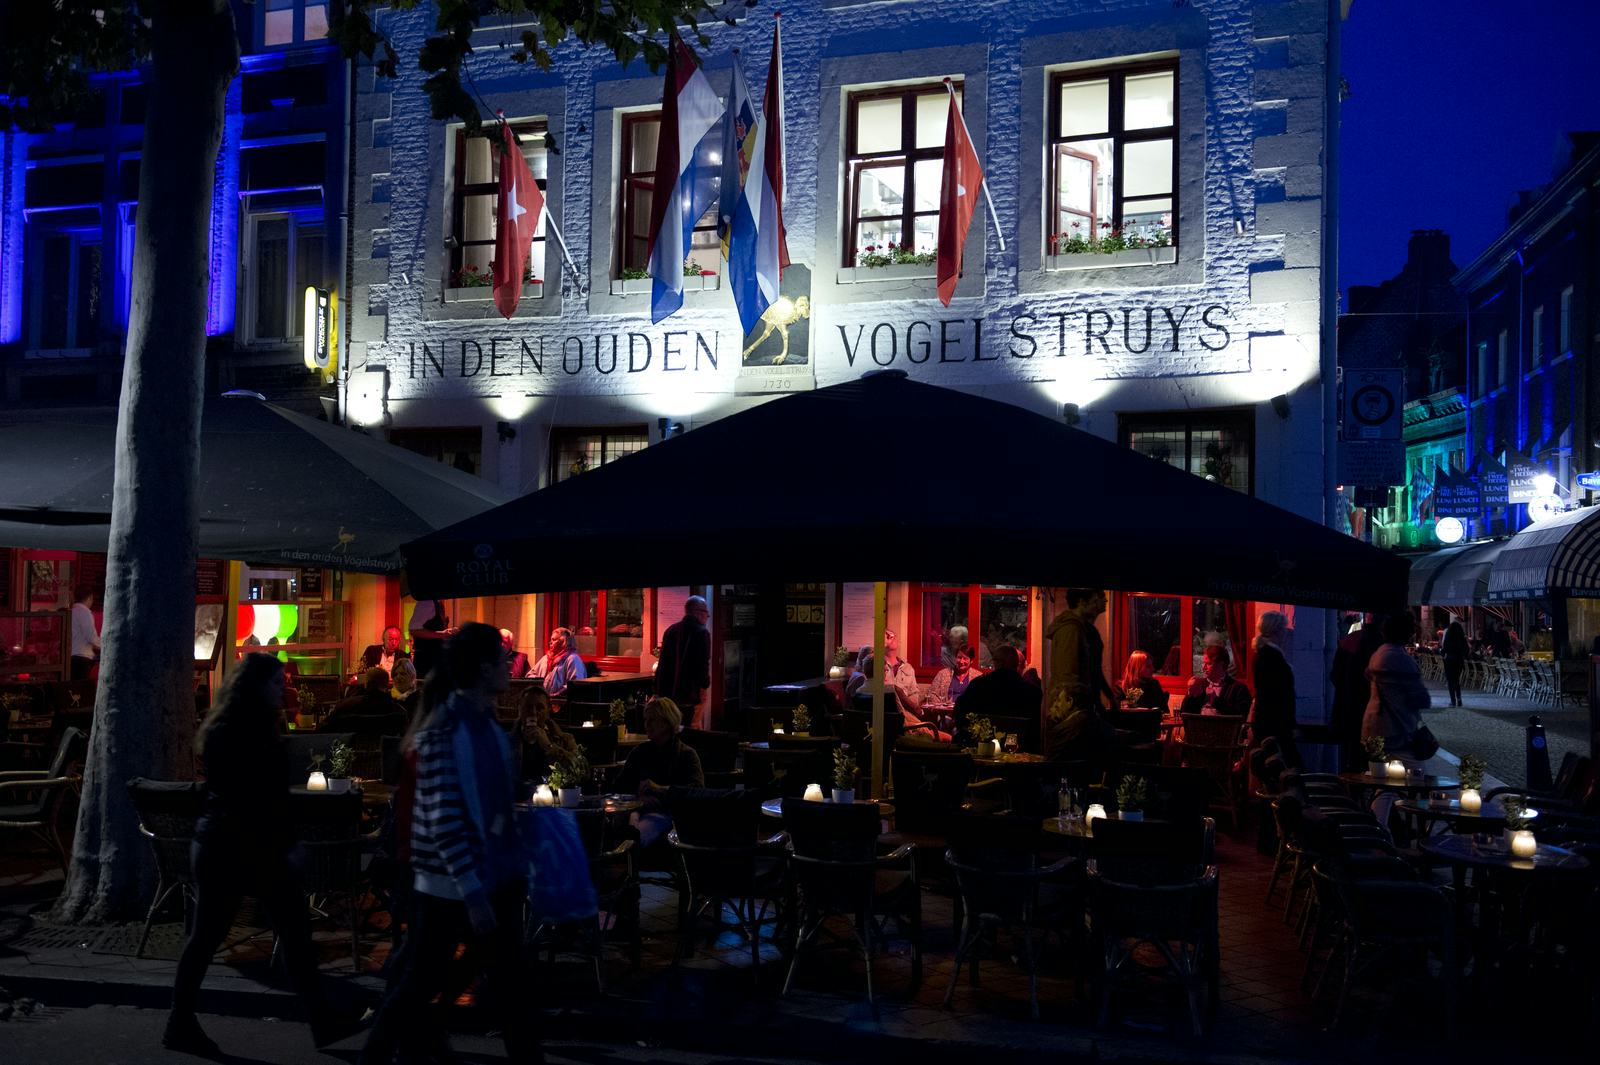 Café Top 100 2015 nr. 40: In den Ouden Vogelstruys, Maastricht